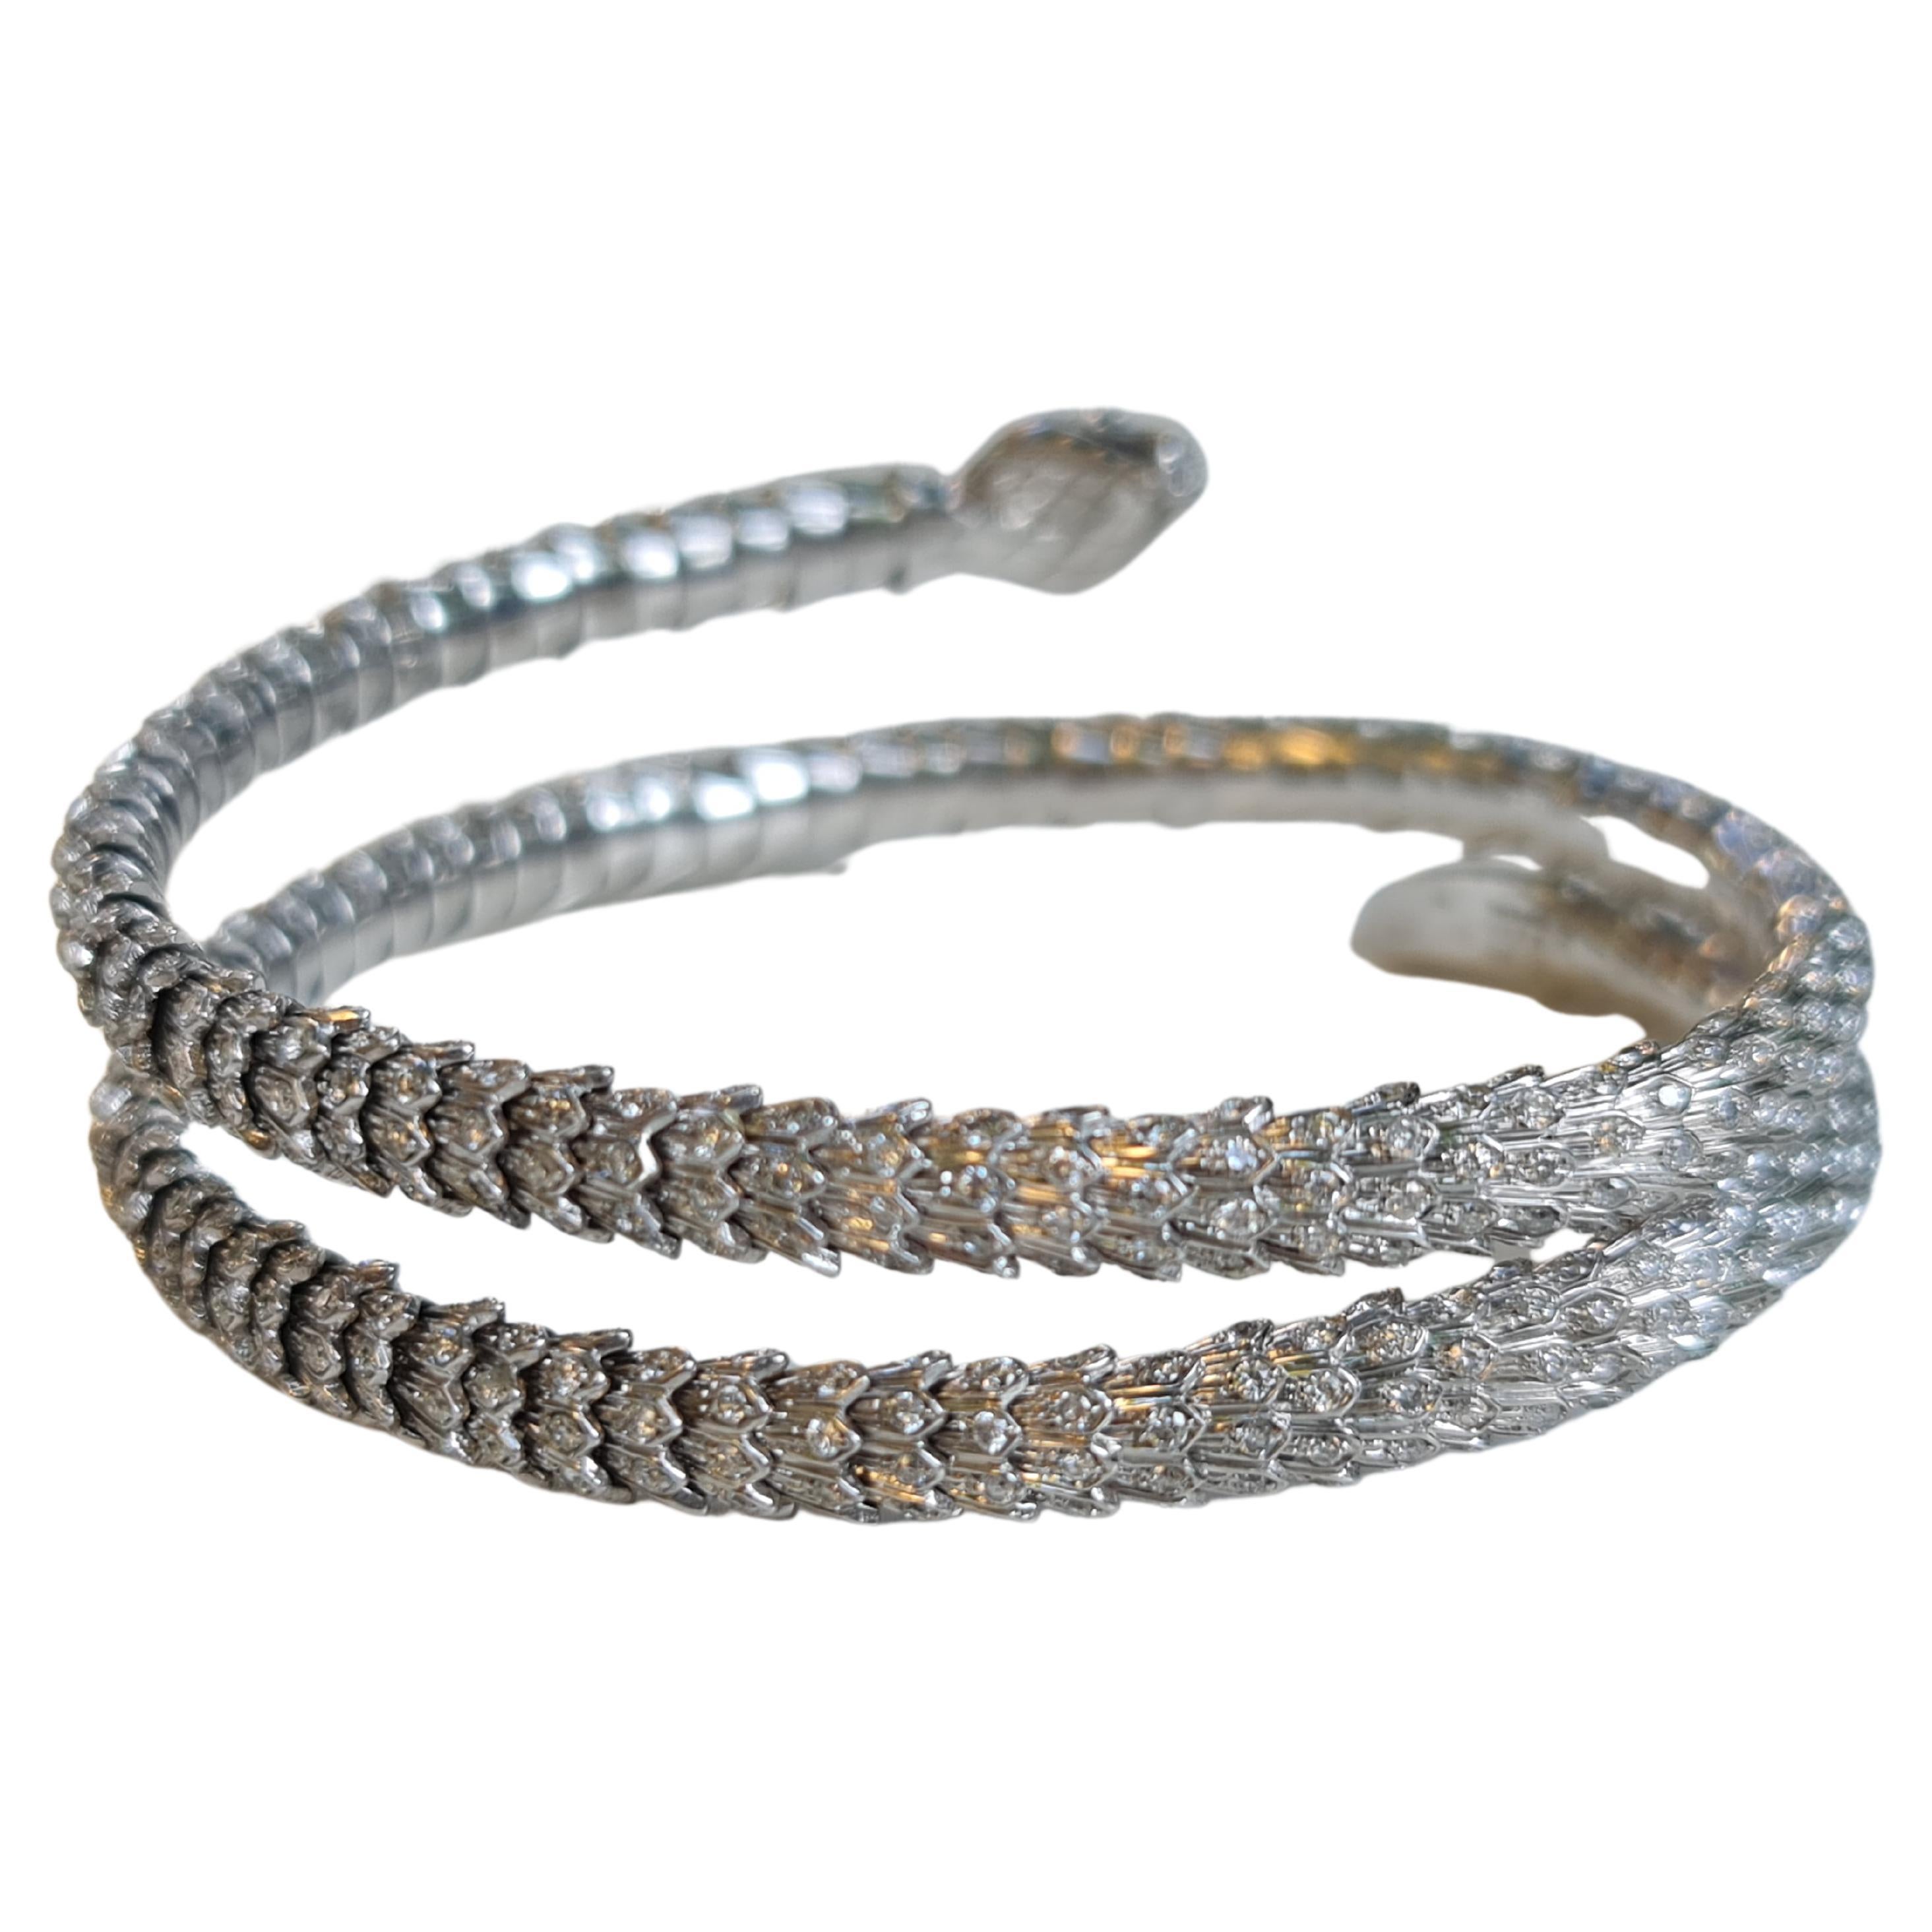 Bracelet Serpenti en or blanc 18 carats et diamants naturels de 5,65 carats, 56 grammes